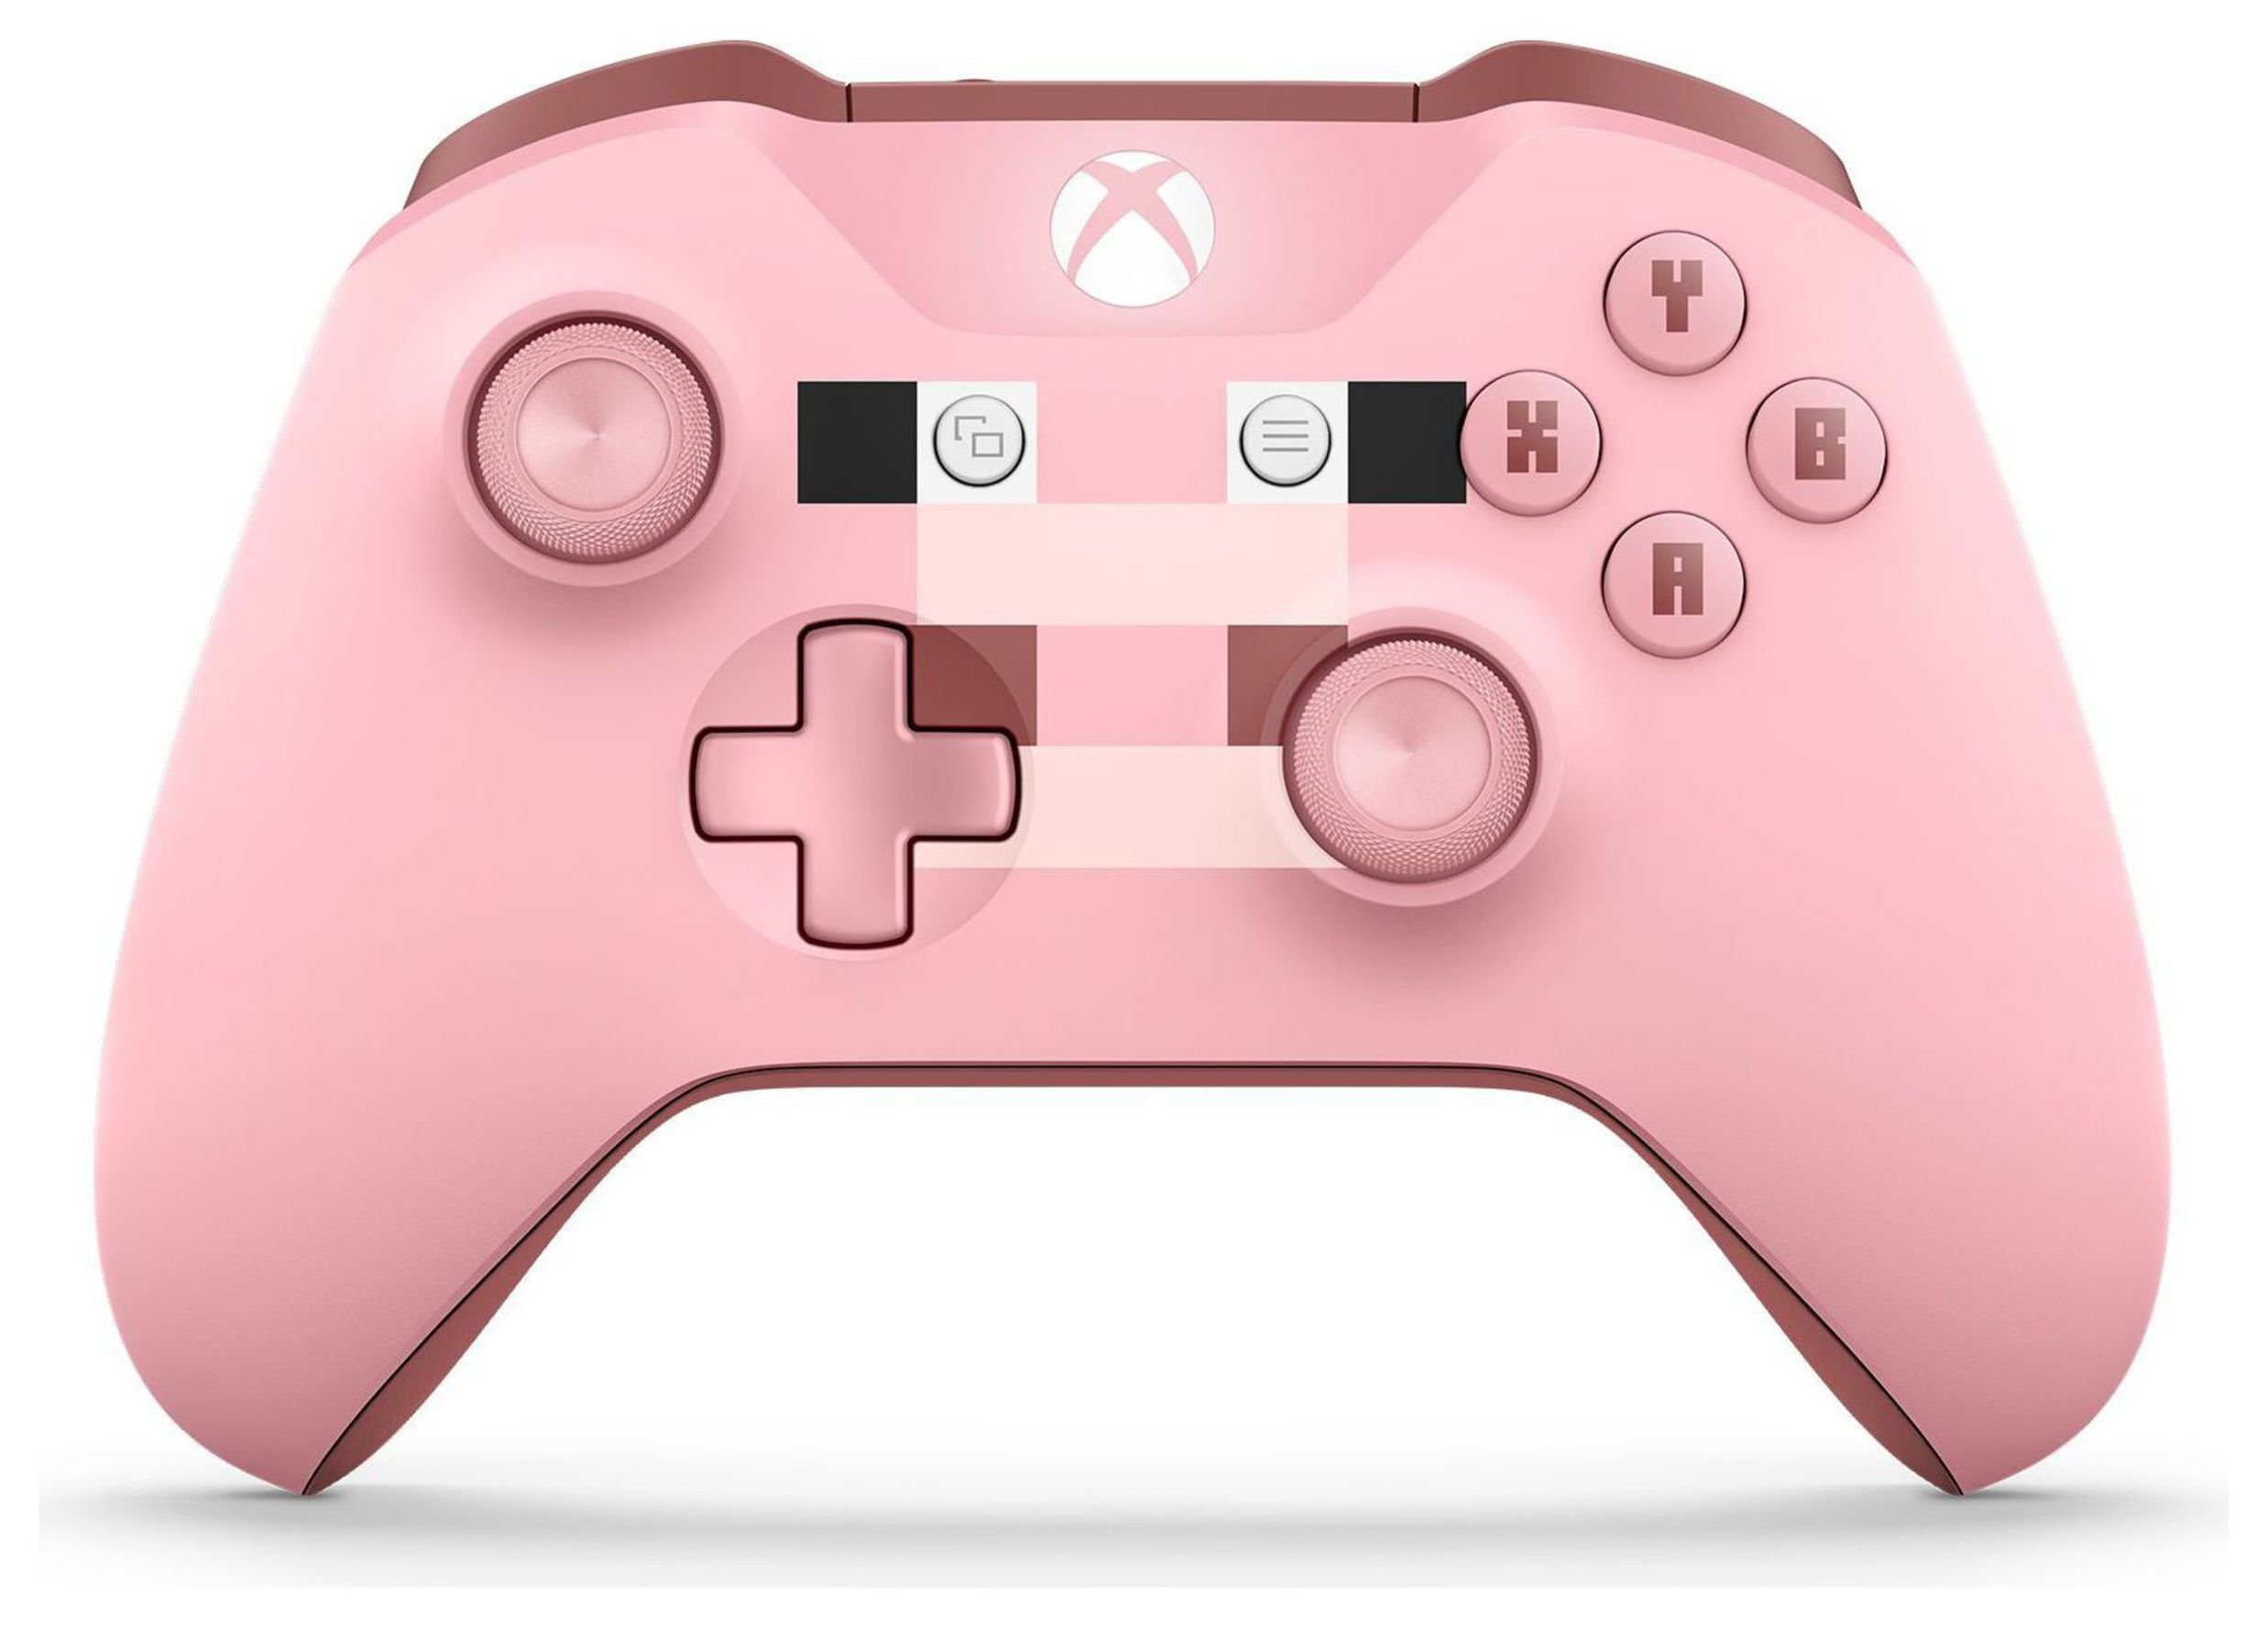 Xbox One Minecraft Pig Controller - Pink